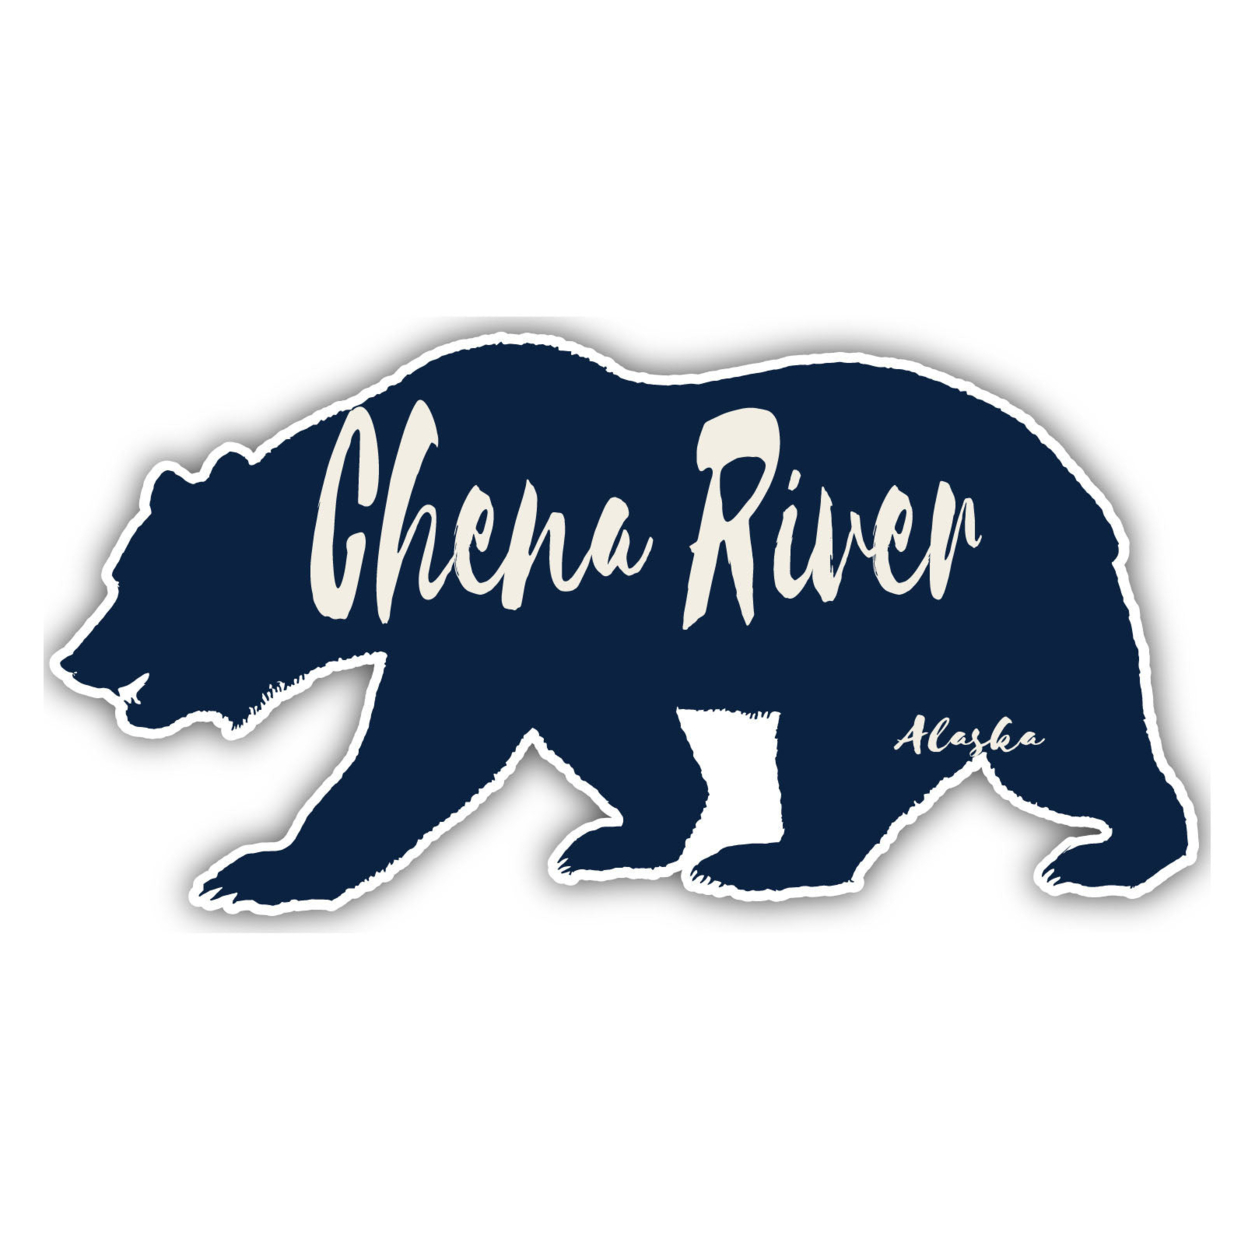 Chena River Alaska Souvenir Decorative Stickers (Choose Theme And Size) - Single Unit, 10-Inch, Bear